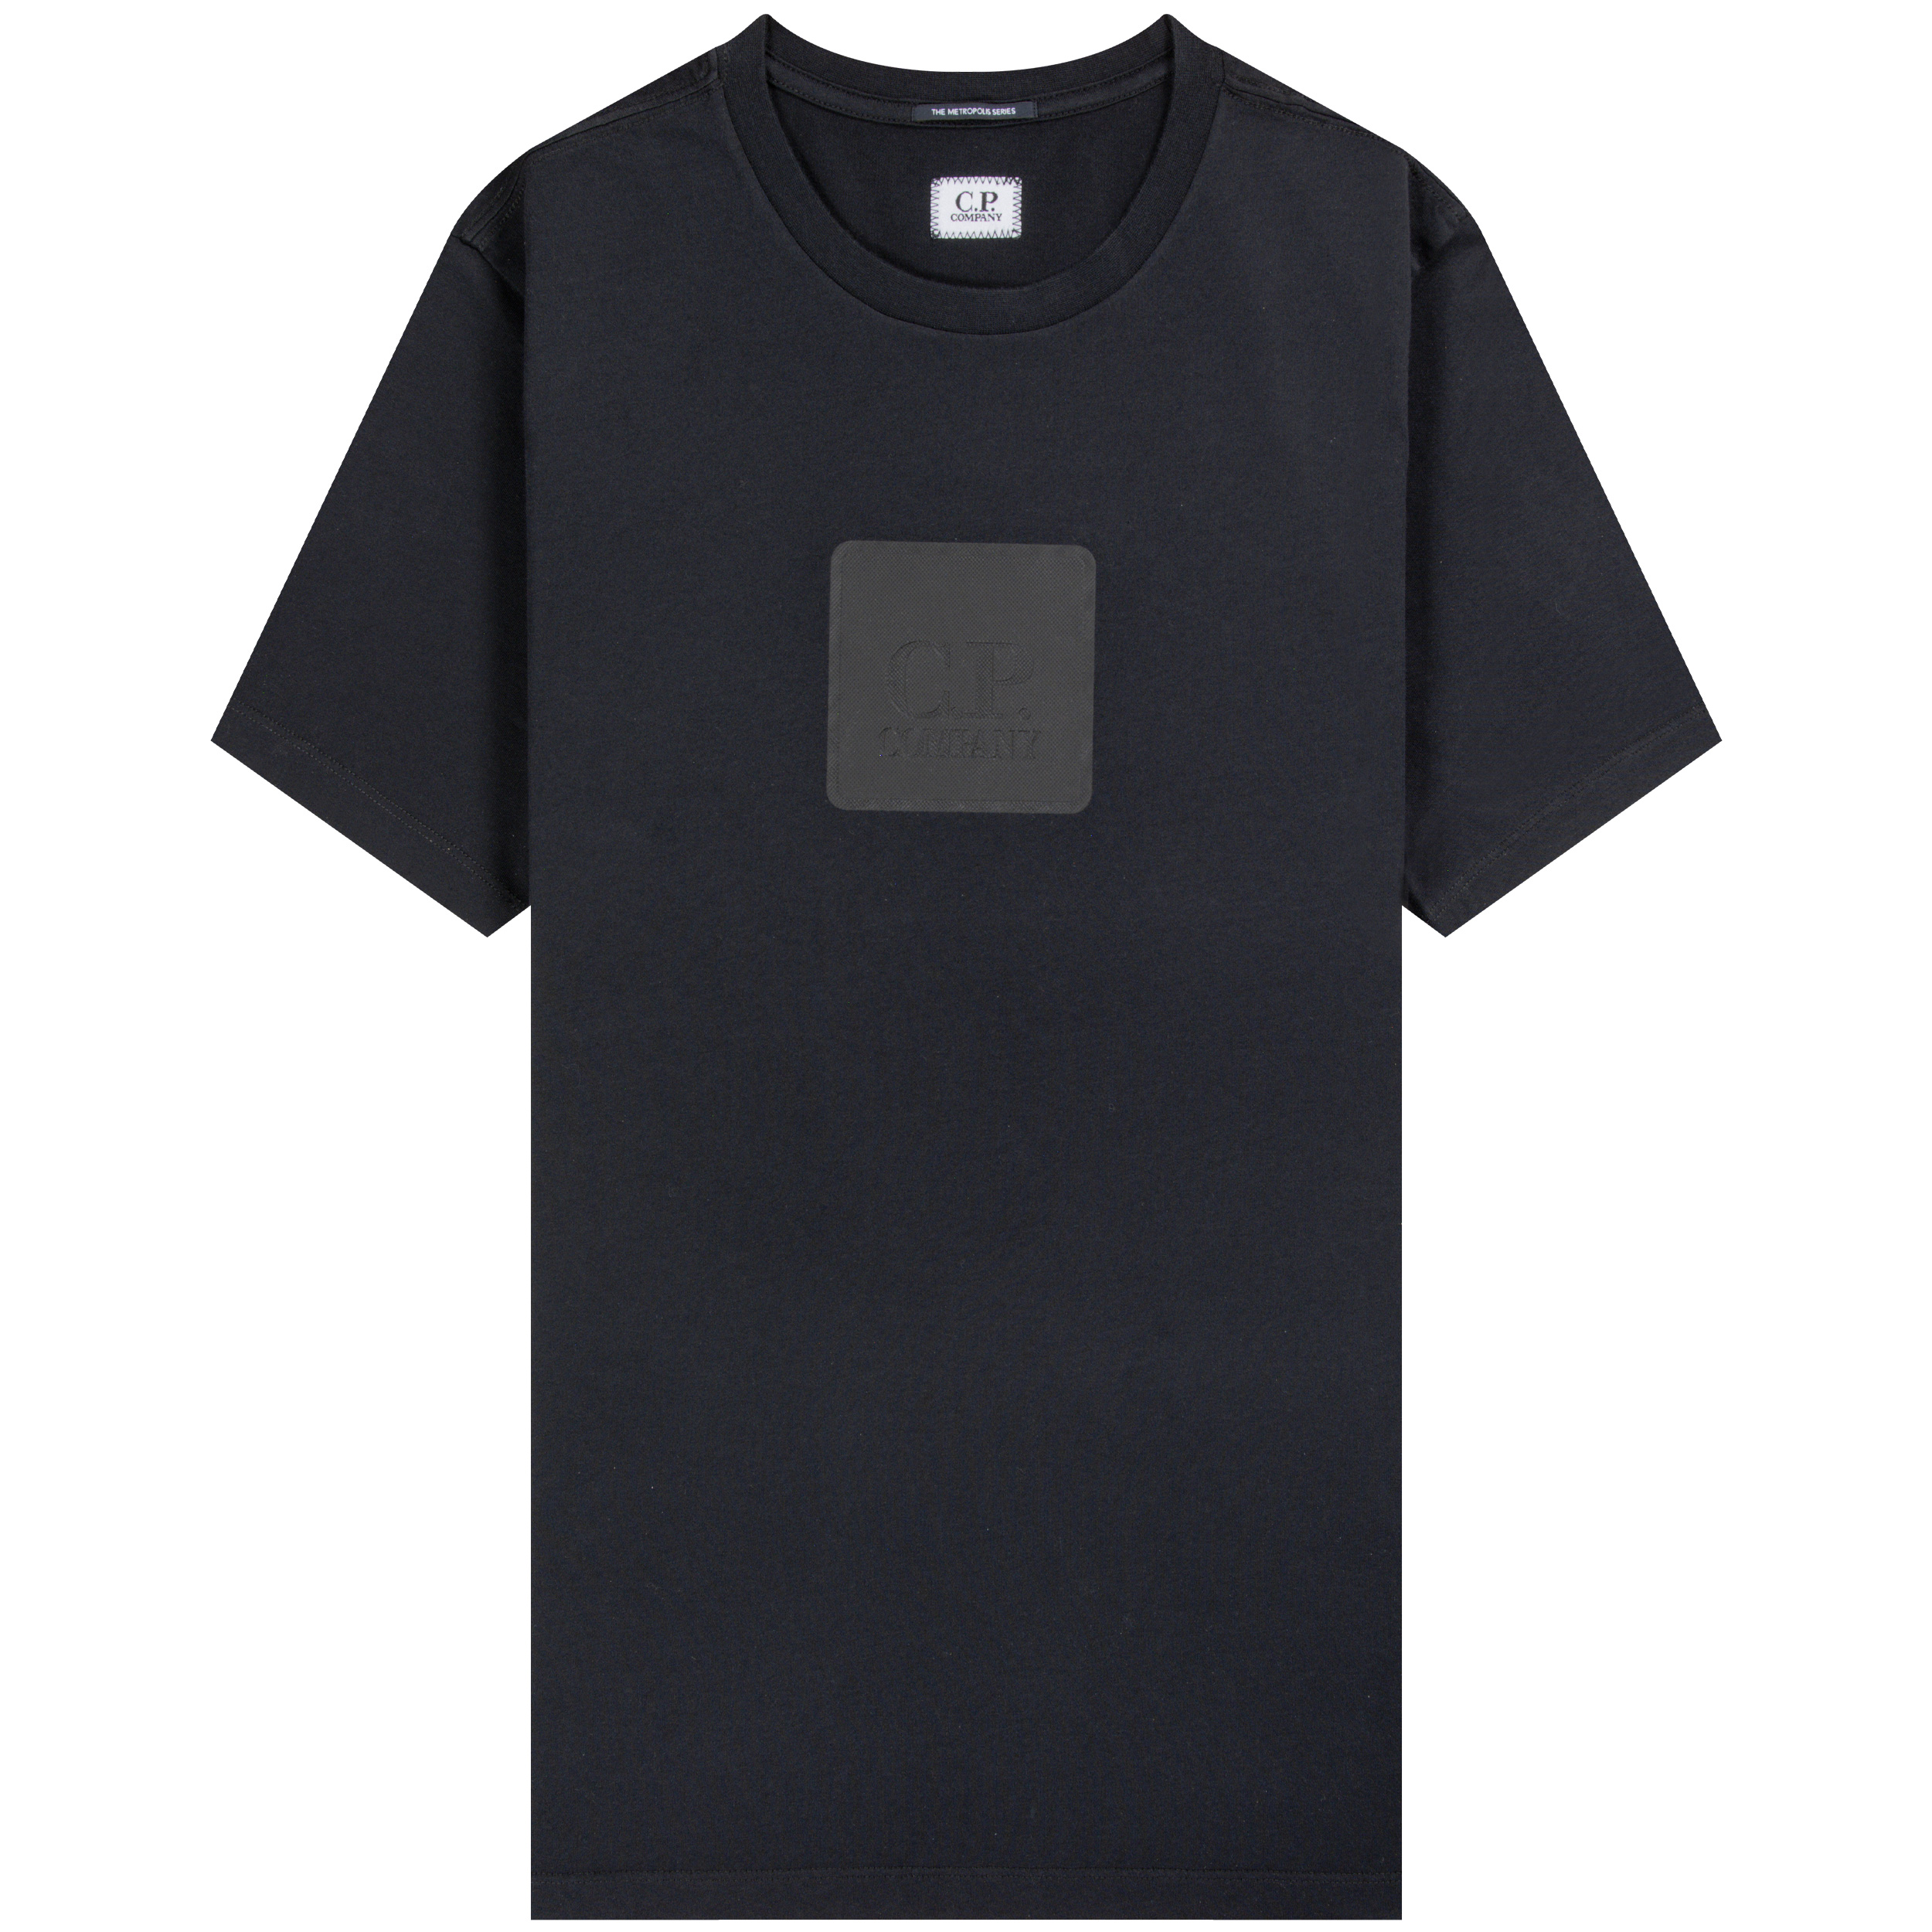 C.P. Company CP Company 'Metropolis Patch' Logo T-Shirt Black